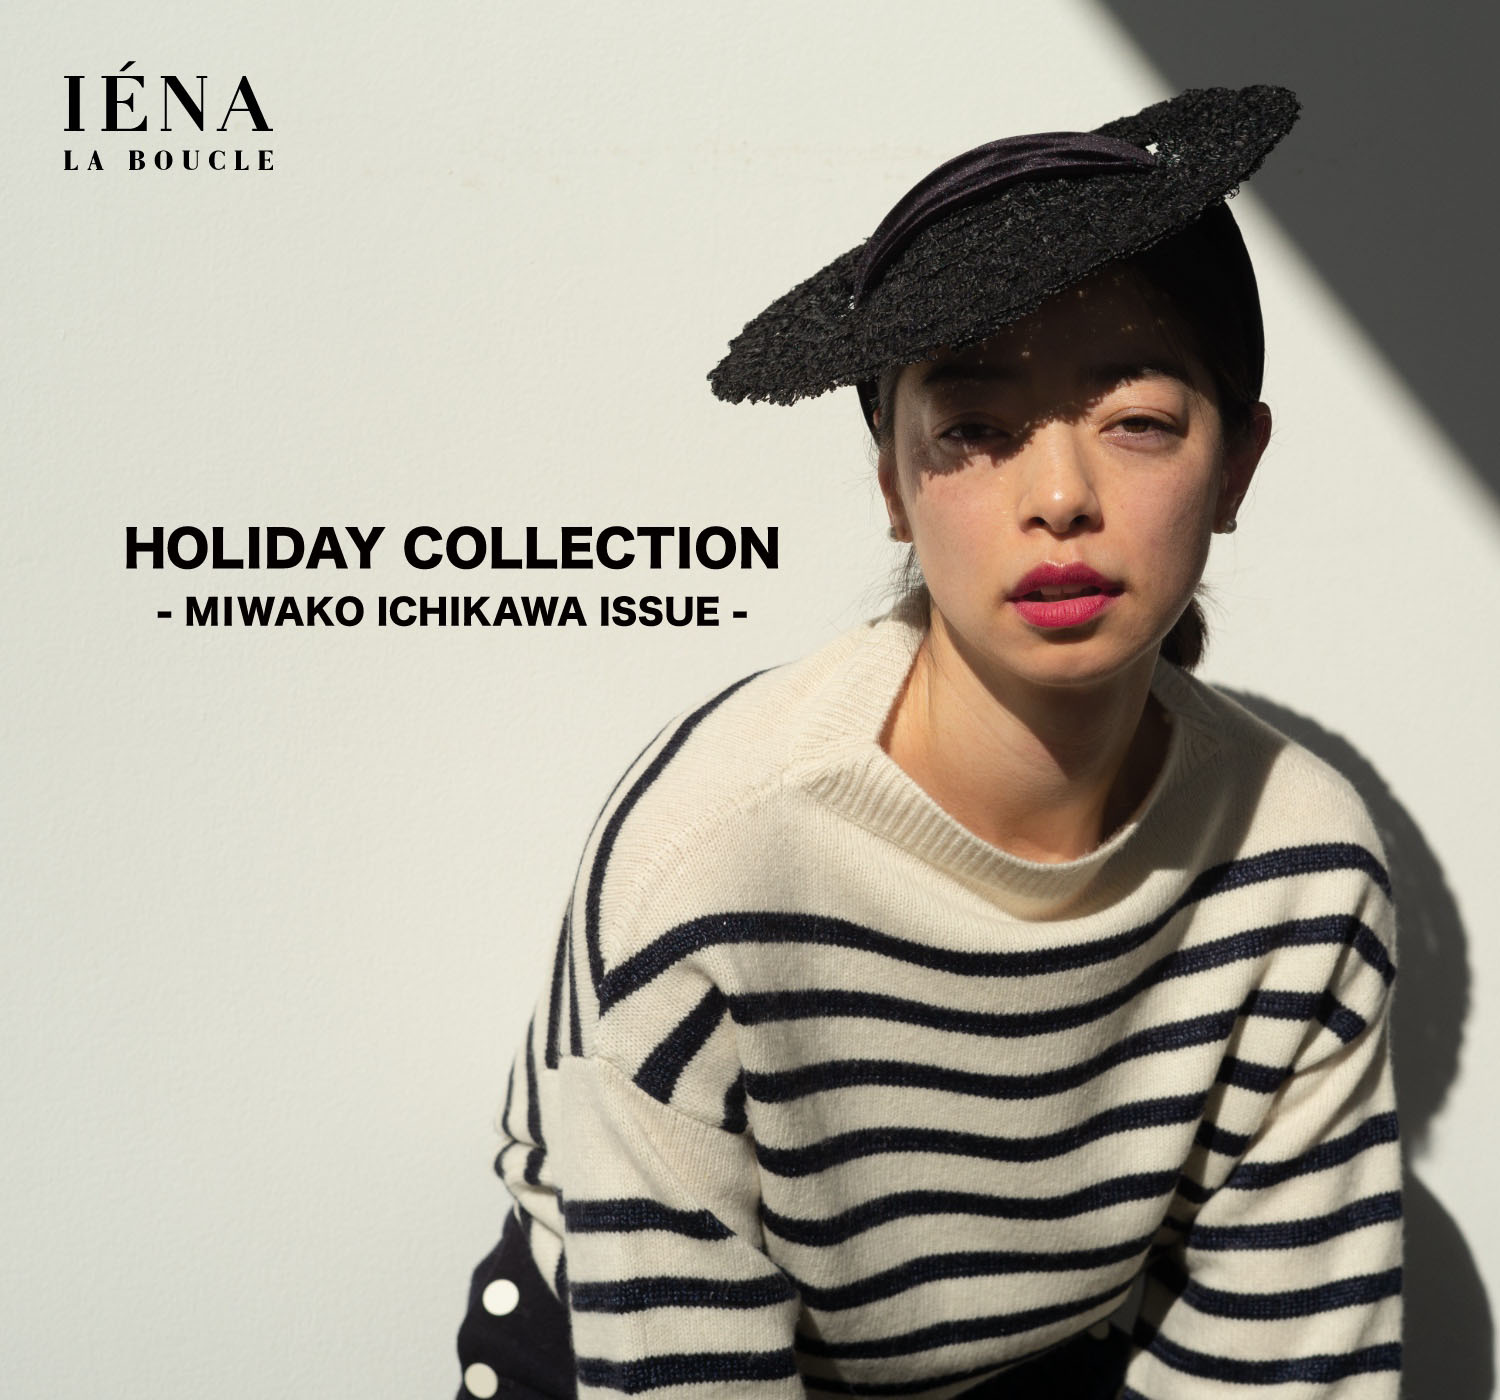 Iena La Boucle Holiday Collection Vol 1 Miwako Ichikawa Issue Iena Baycrew S Store